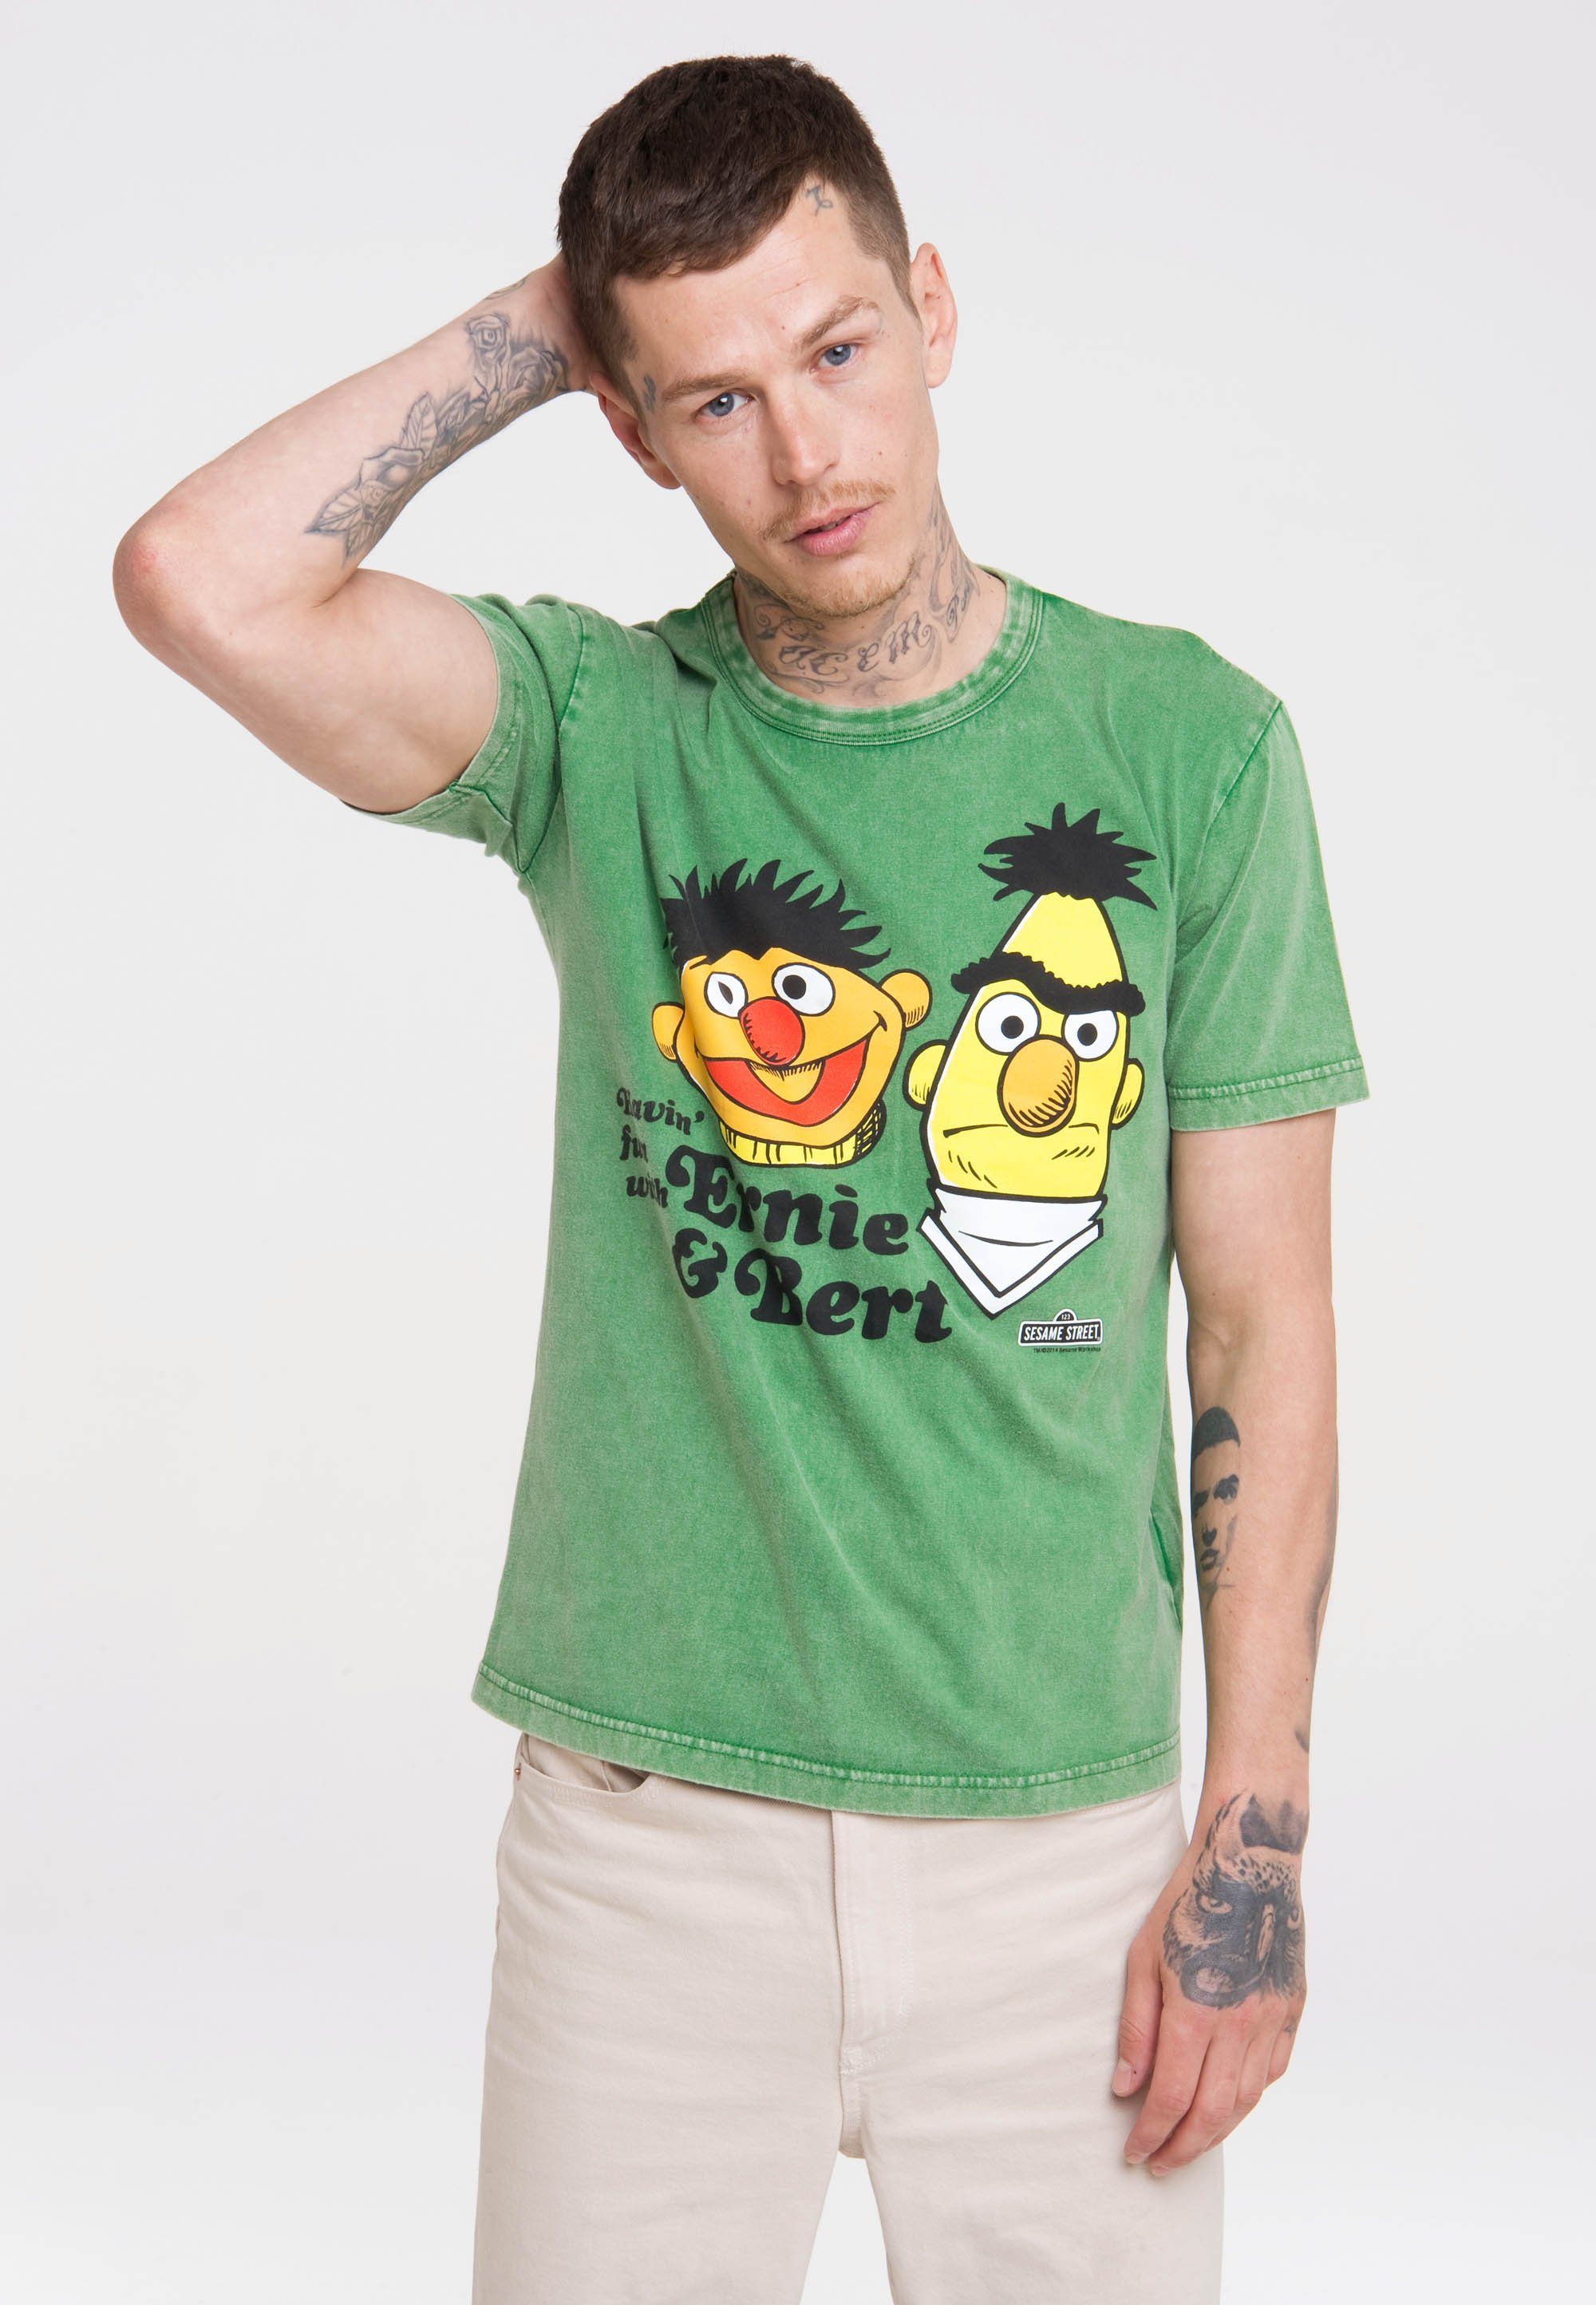 - lizenziertem Ernie Print T-Shirt LOGOSHIRT Sesamstrasse & mit Bert